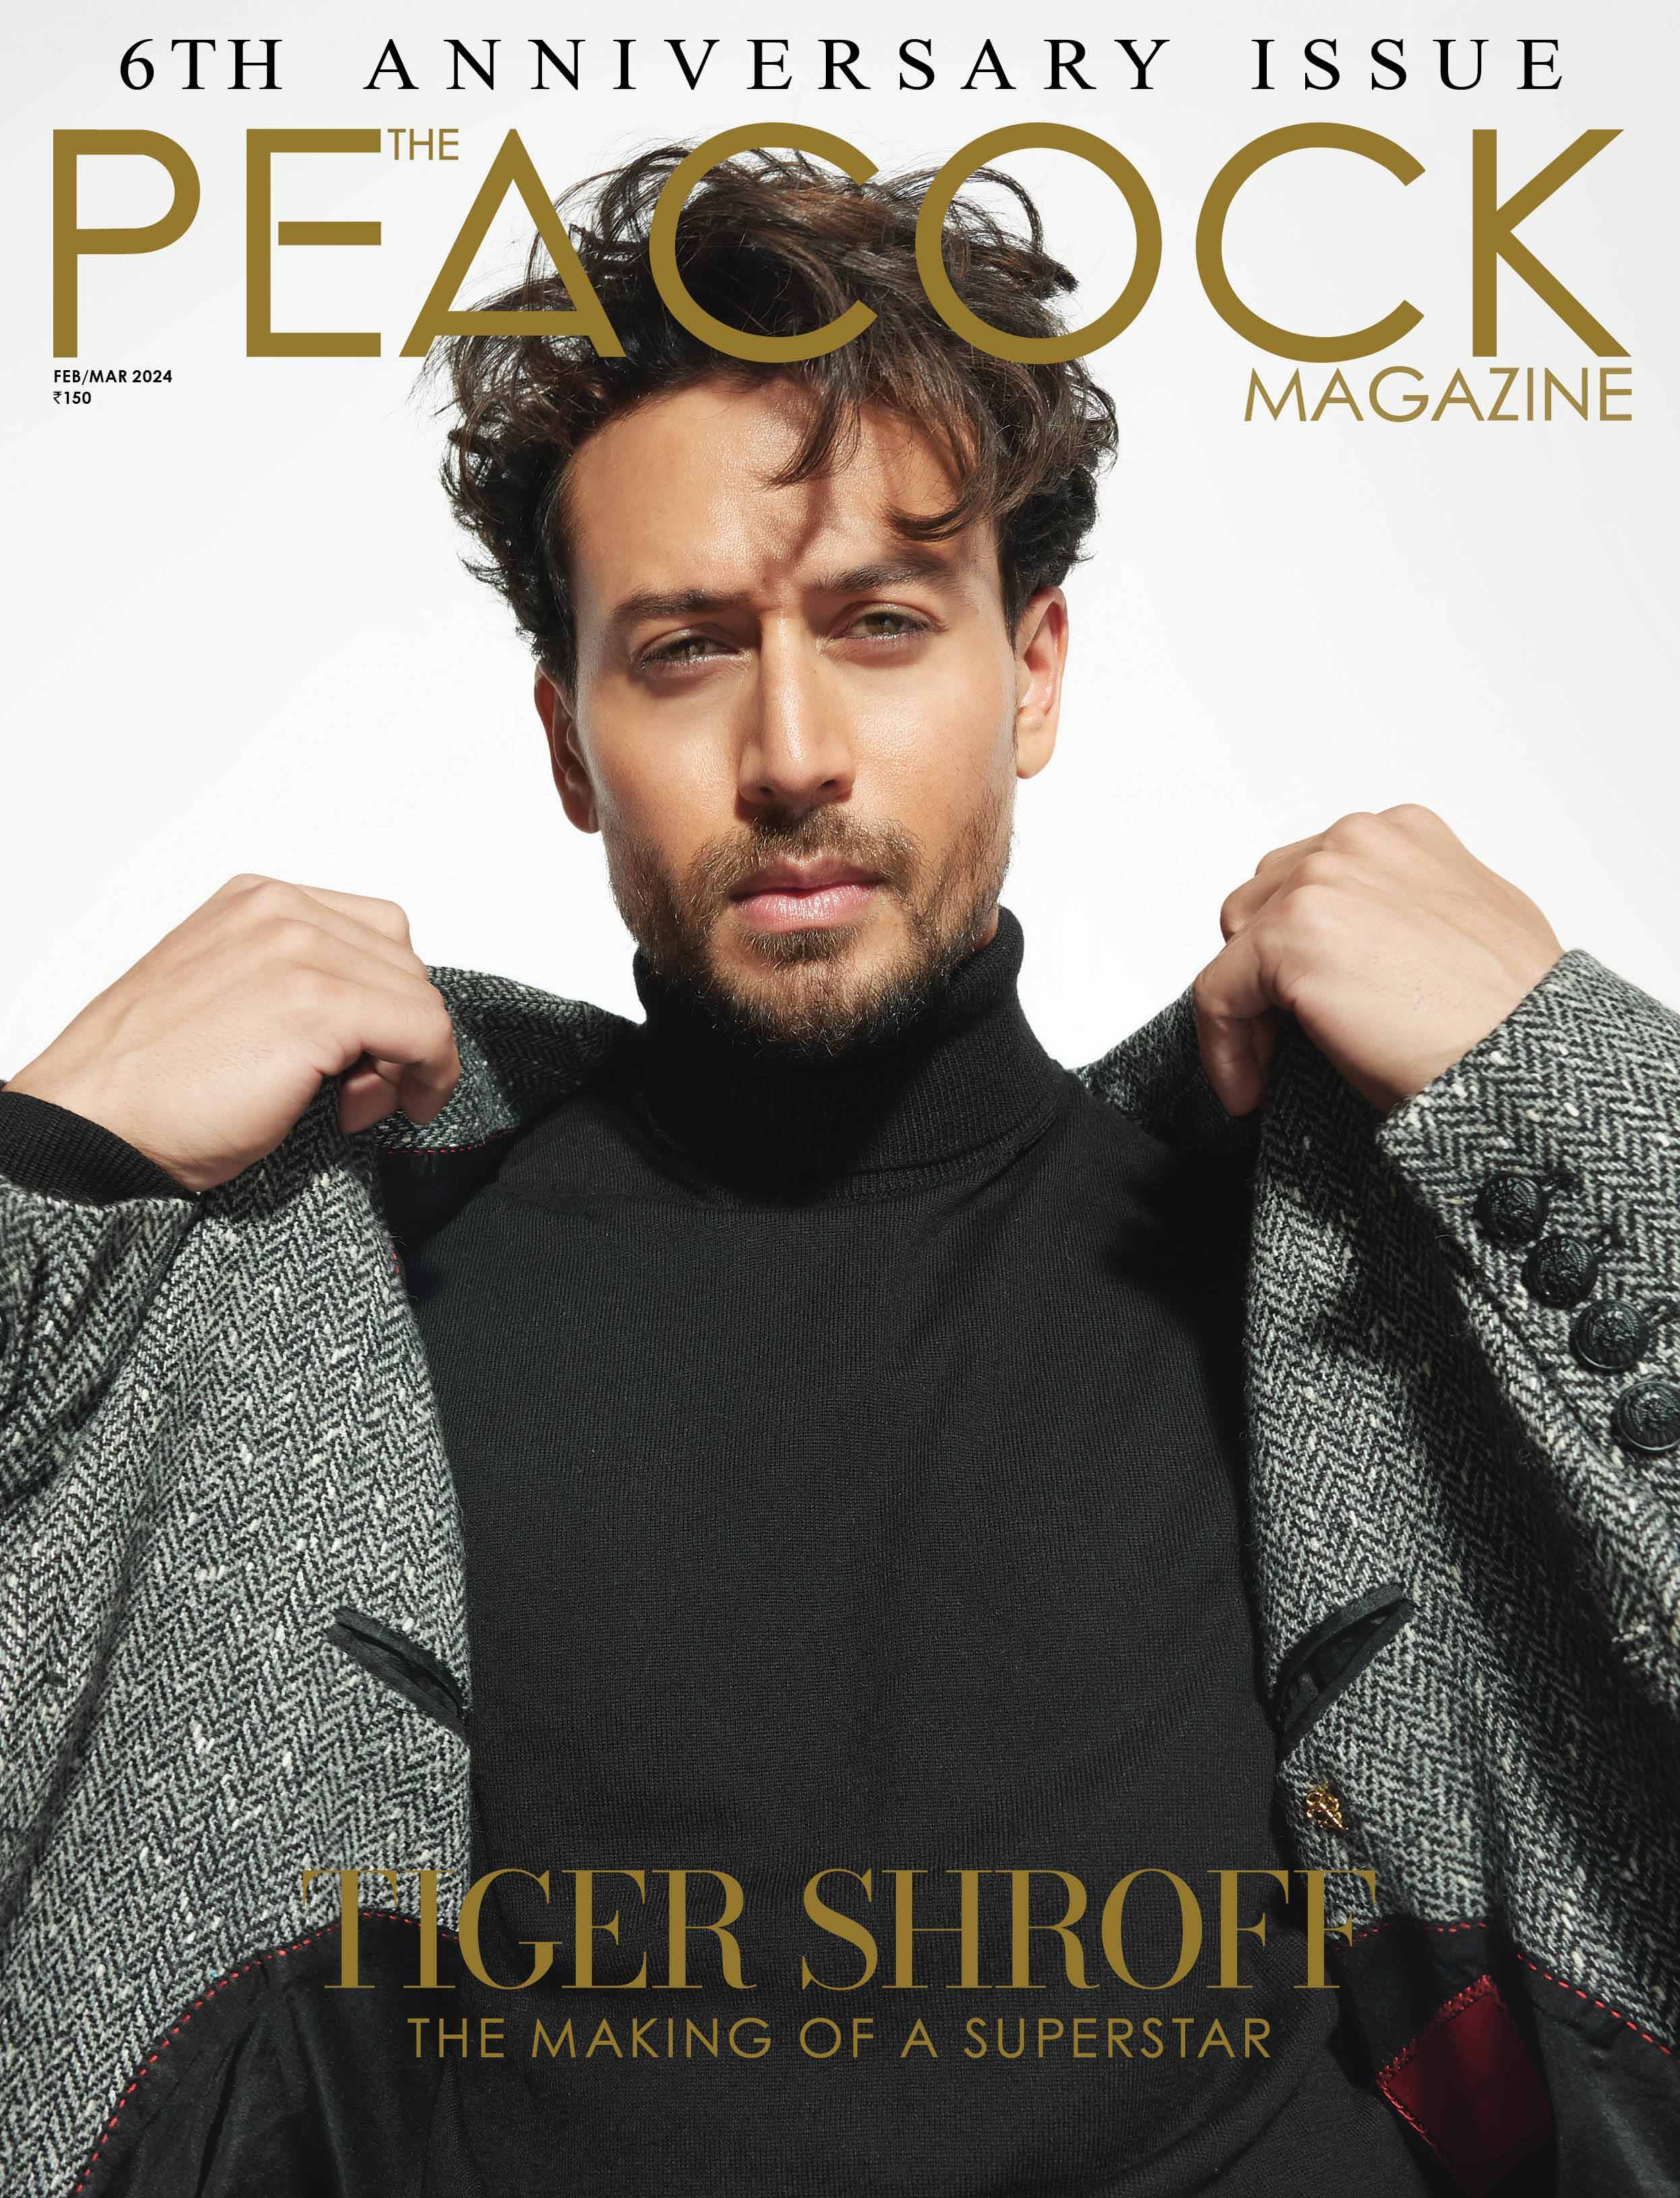 Tiger-Shroff-The-Peacock-Magazine-Cover-Jpeg